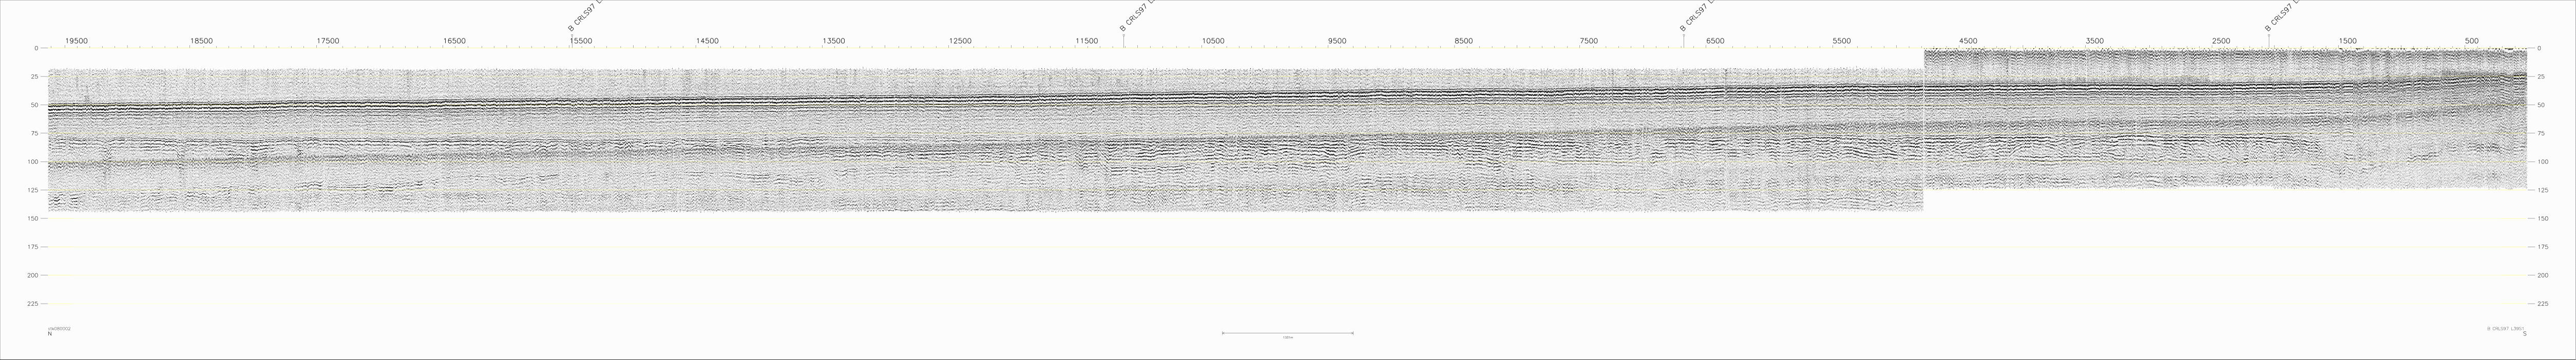 Seismic Reflection Profile Line No.: L39s1a (683317 bytes)